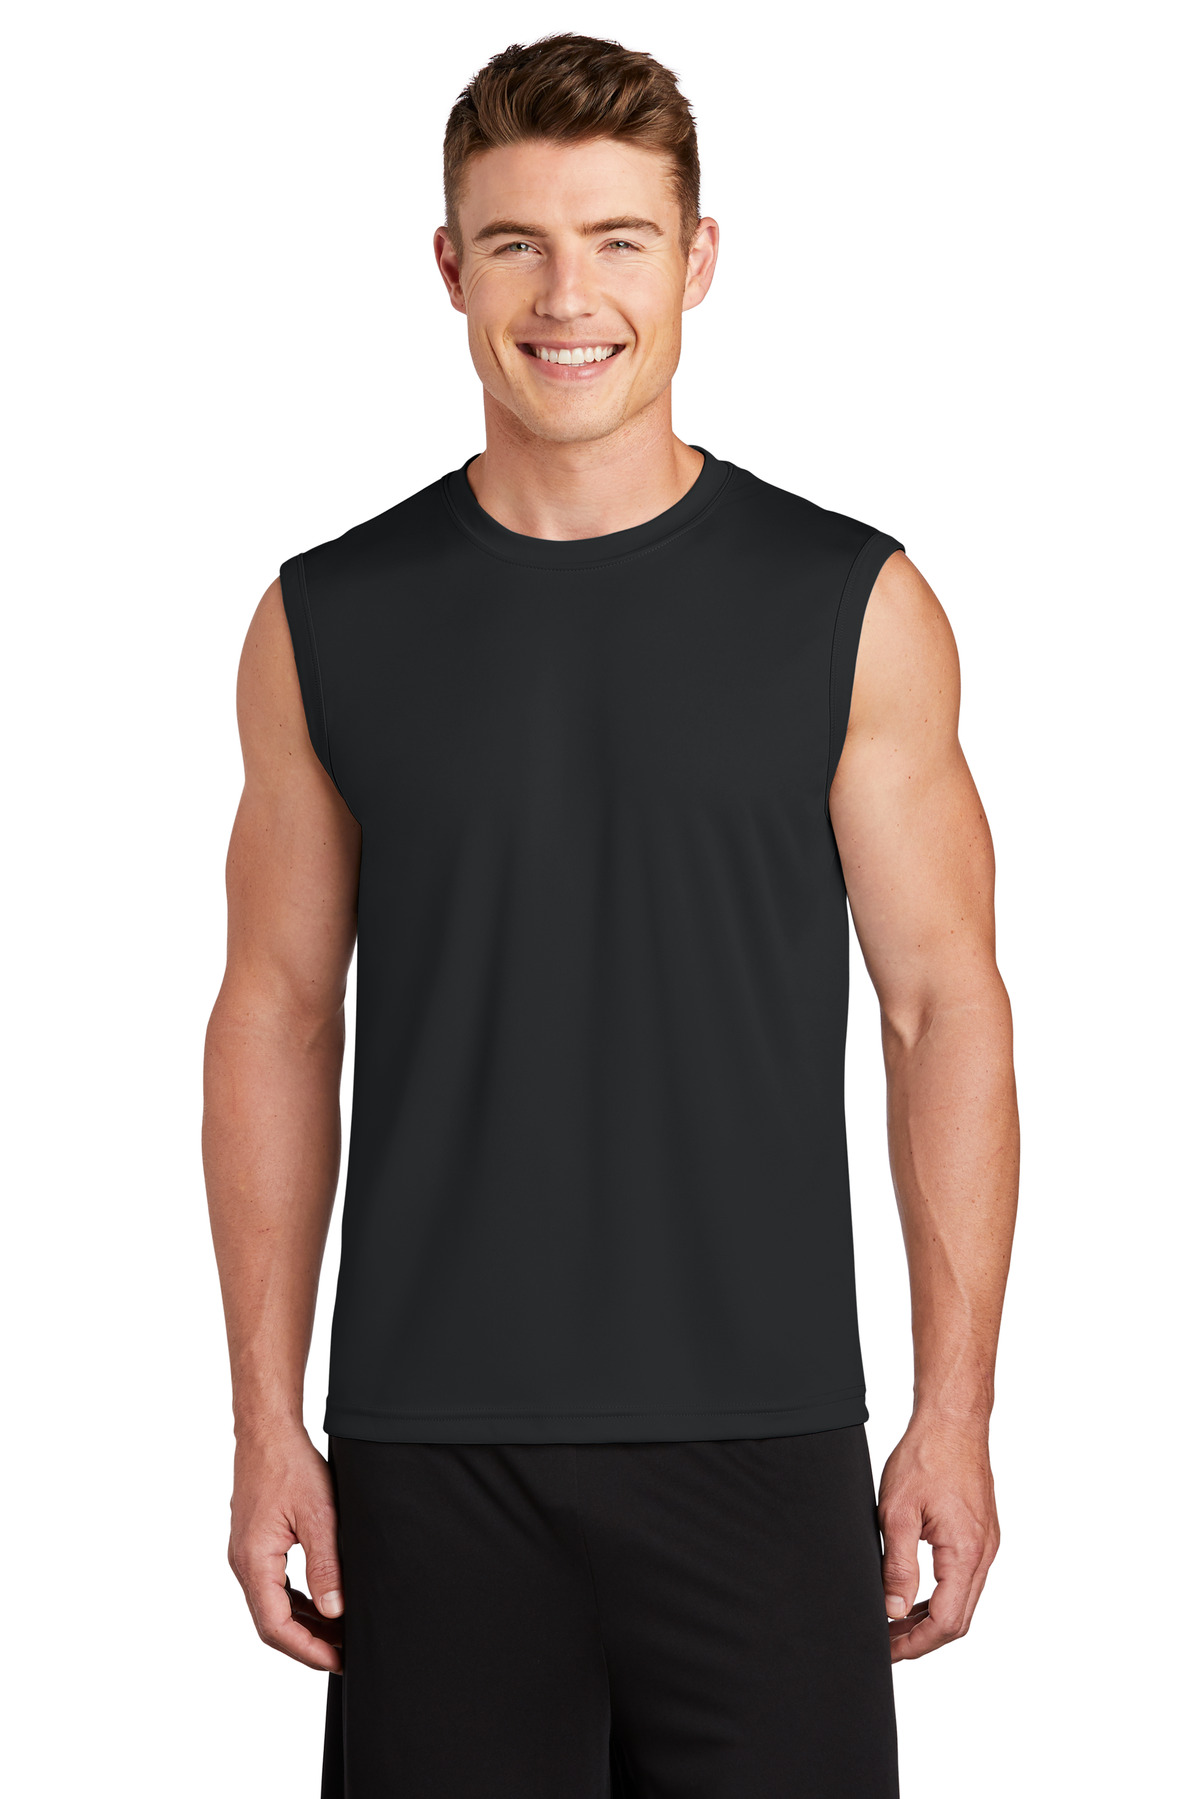 Sport-Tek Activewear T-Shirts for Hospitality ® Sleeveless PosiCharge® Competitor Tee.-Sport-Tek